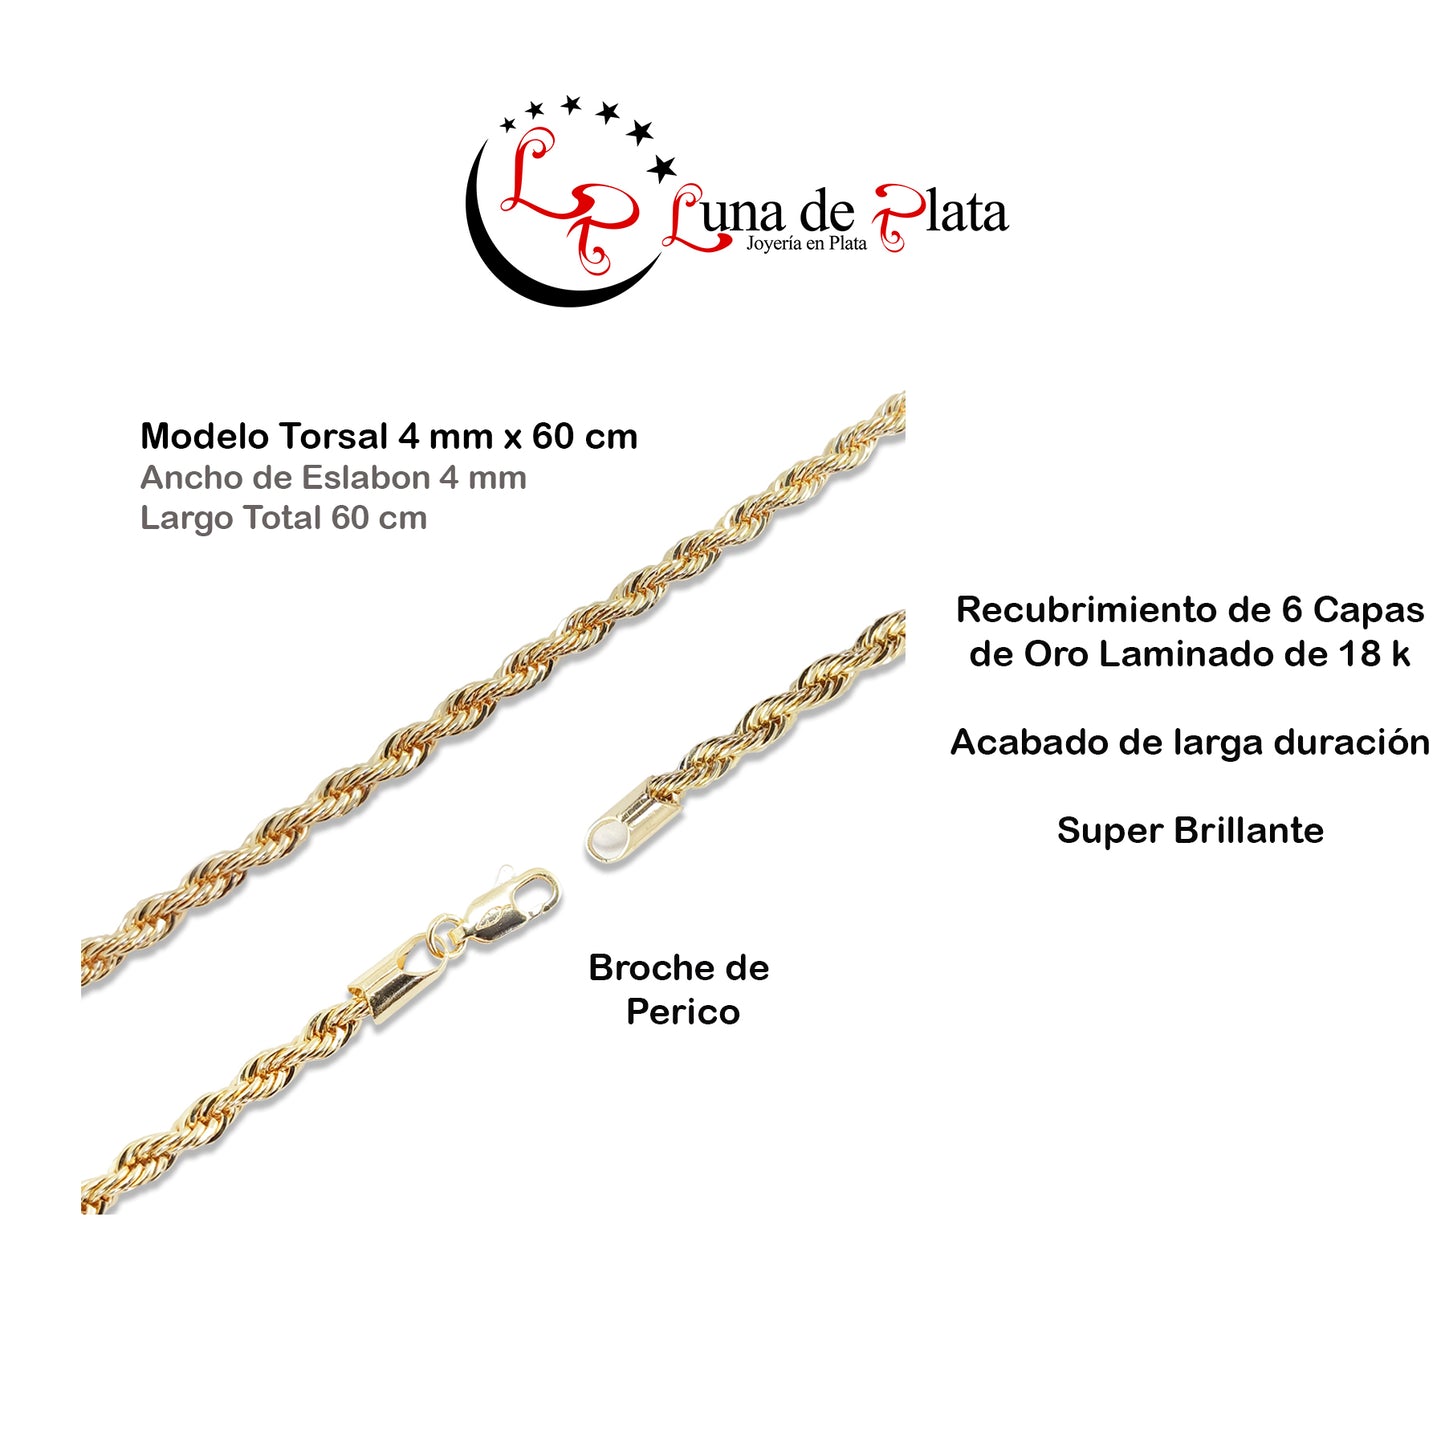 LPCG001 Cadena Oro Laminado Mod Torsal 4 mm x 60 cm 1379445972